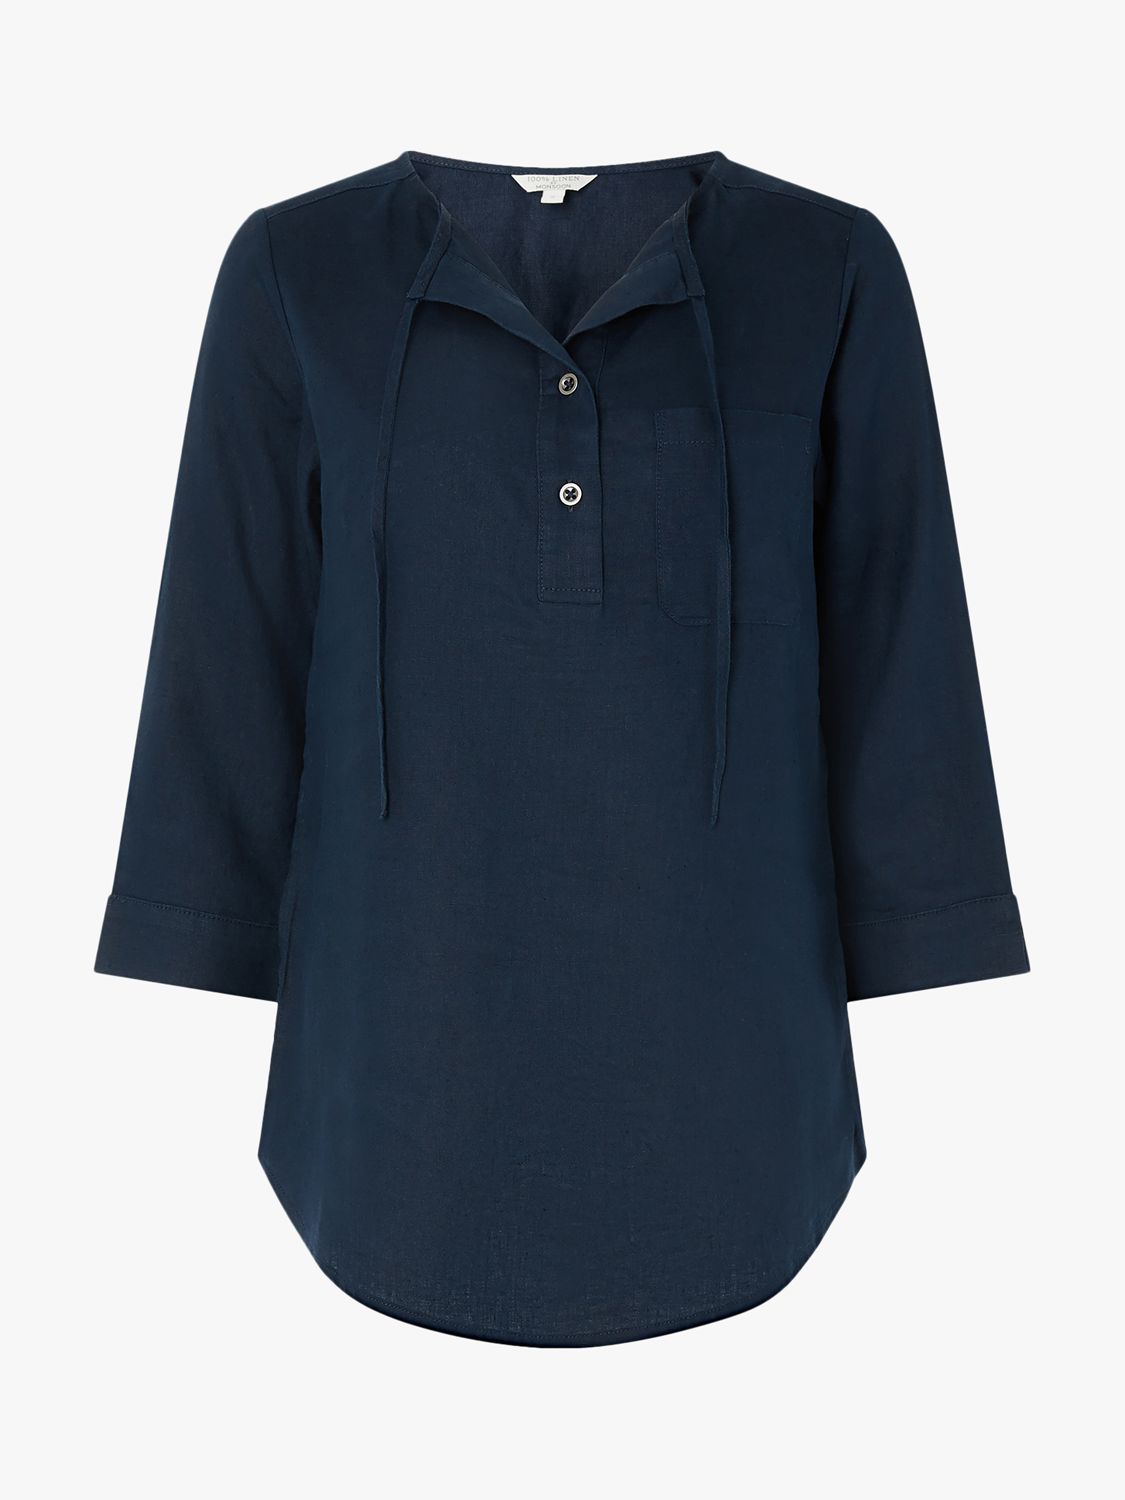 Monsoon Millie Linen Shirt, Navy at John Lewis & Partners